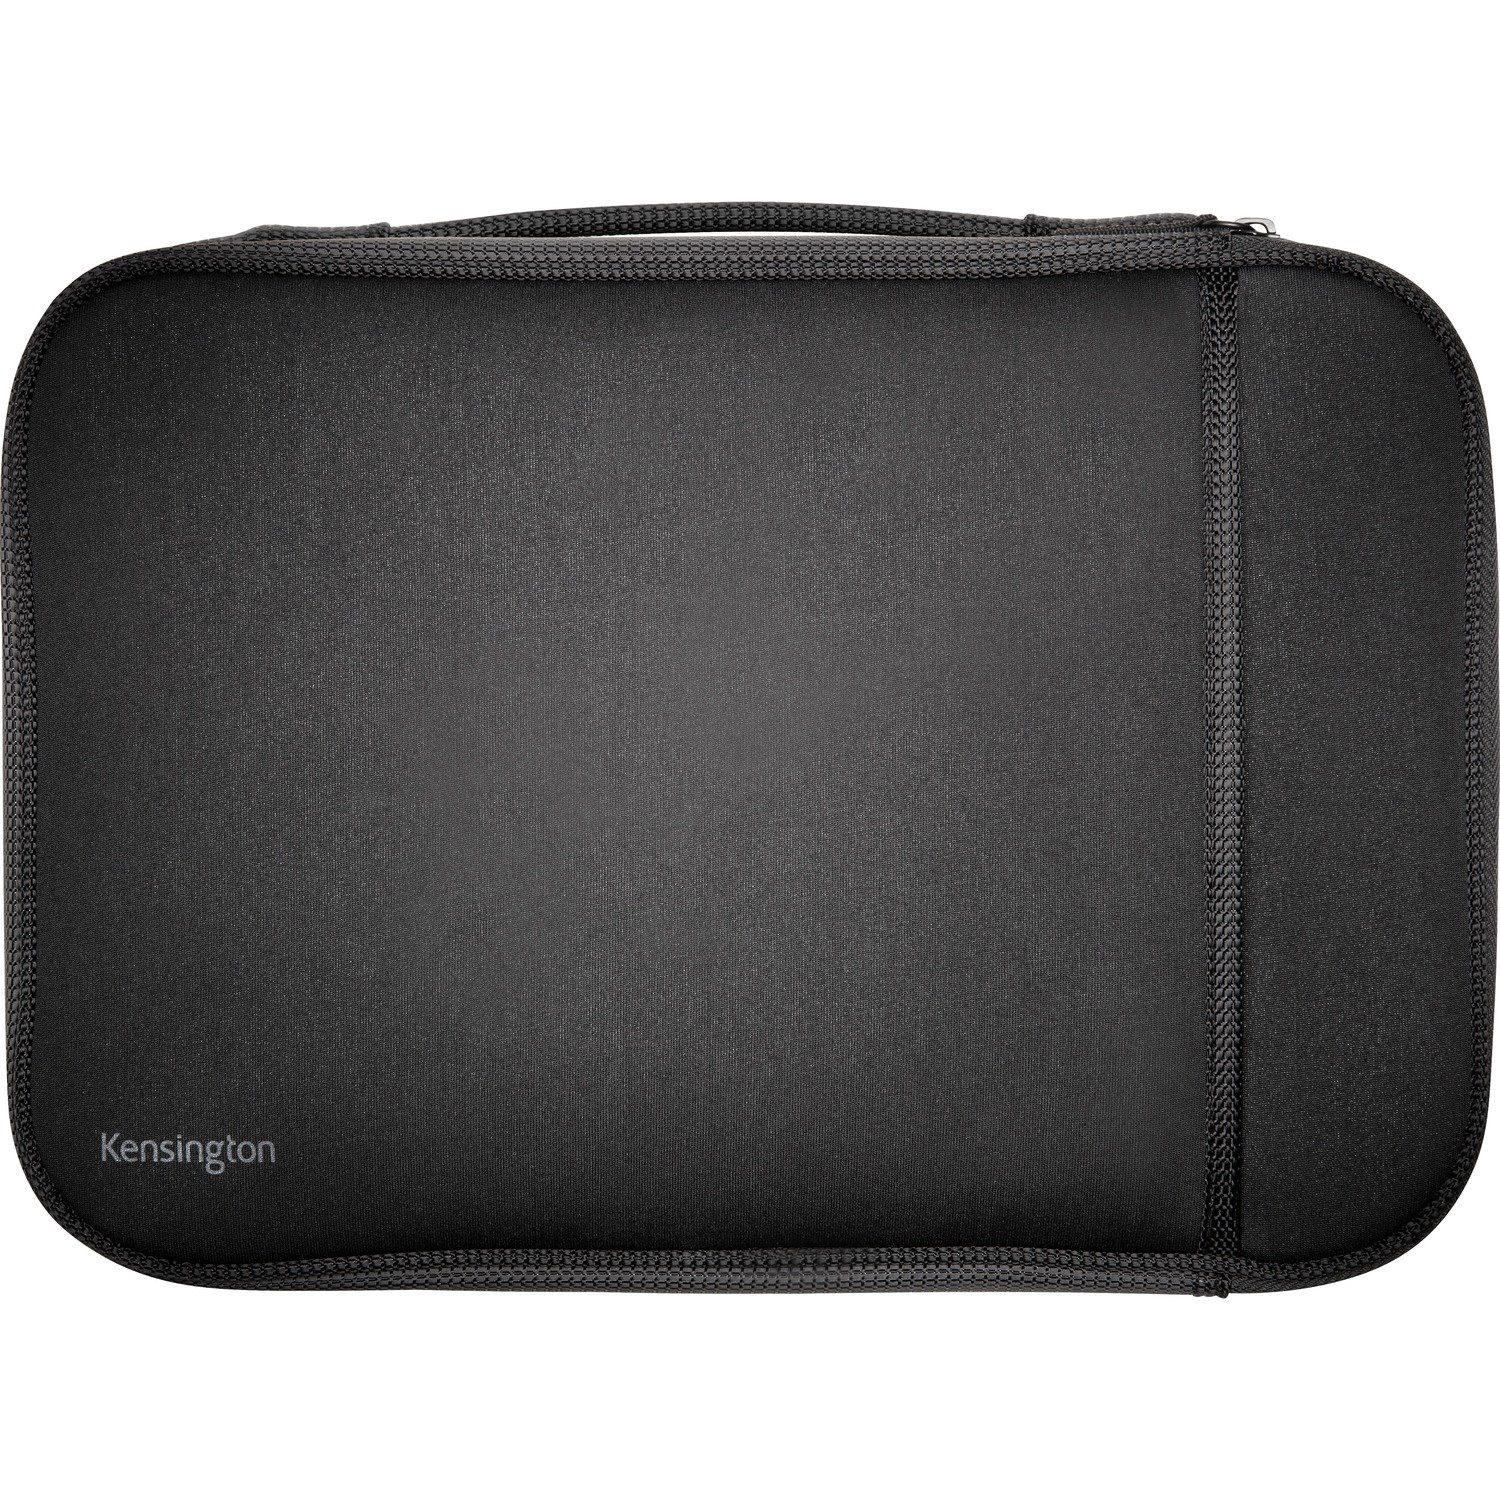 Kensington Carrying Case (Sleeve) for 10" to 11.6" Apple Netbook, Chromebook, MacBook Air - Black